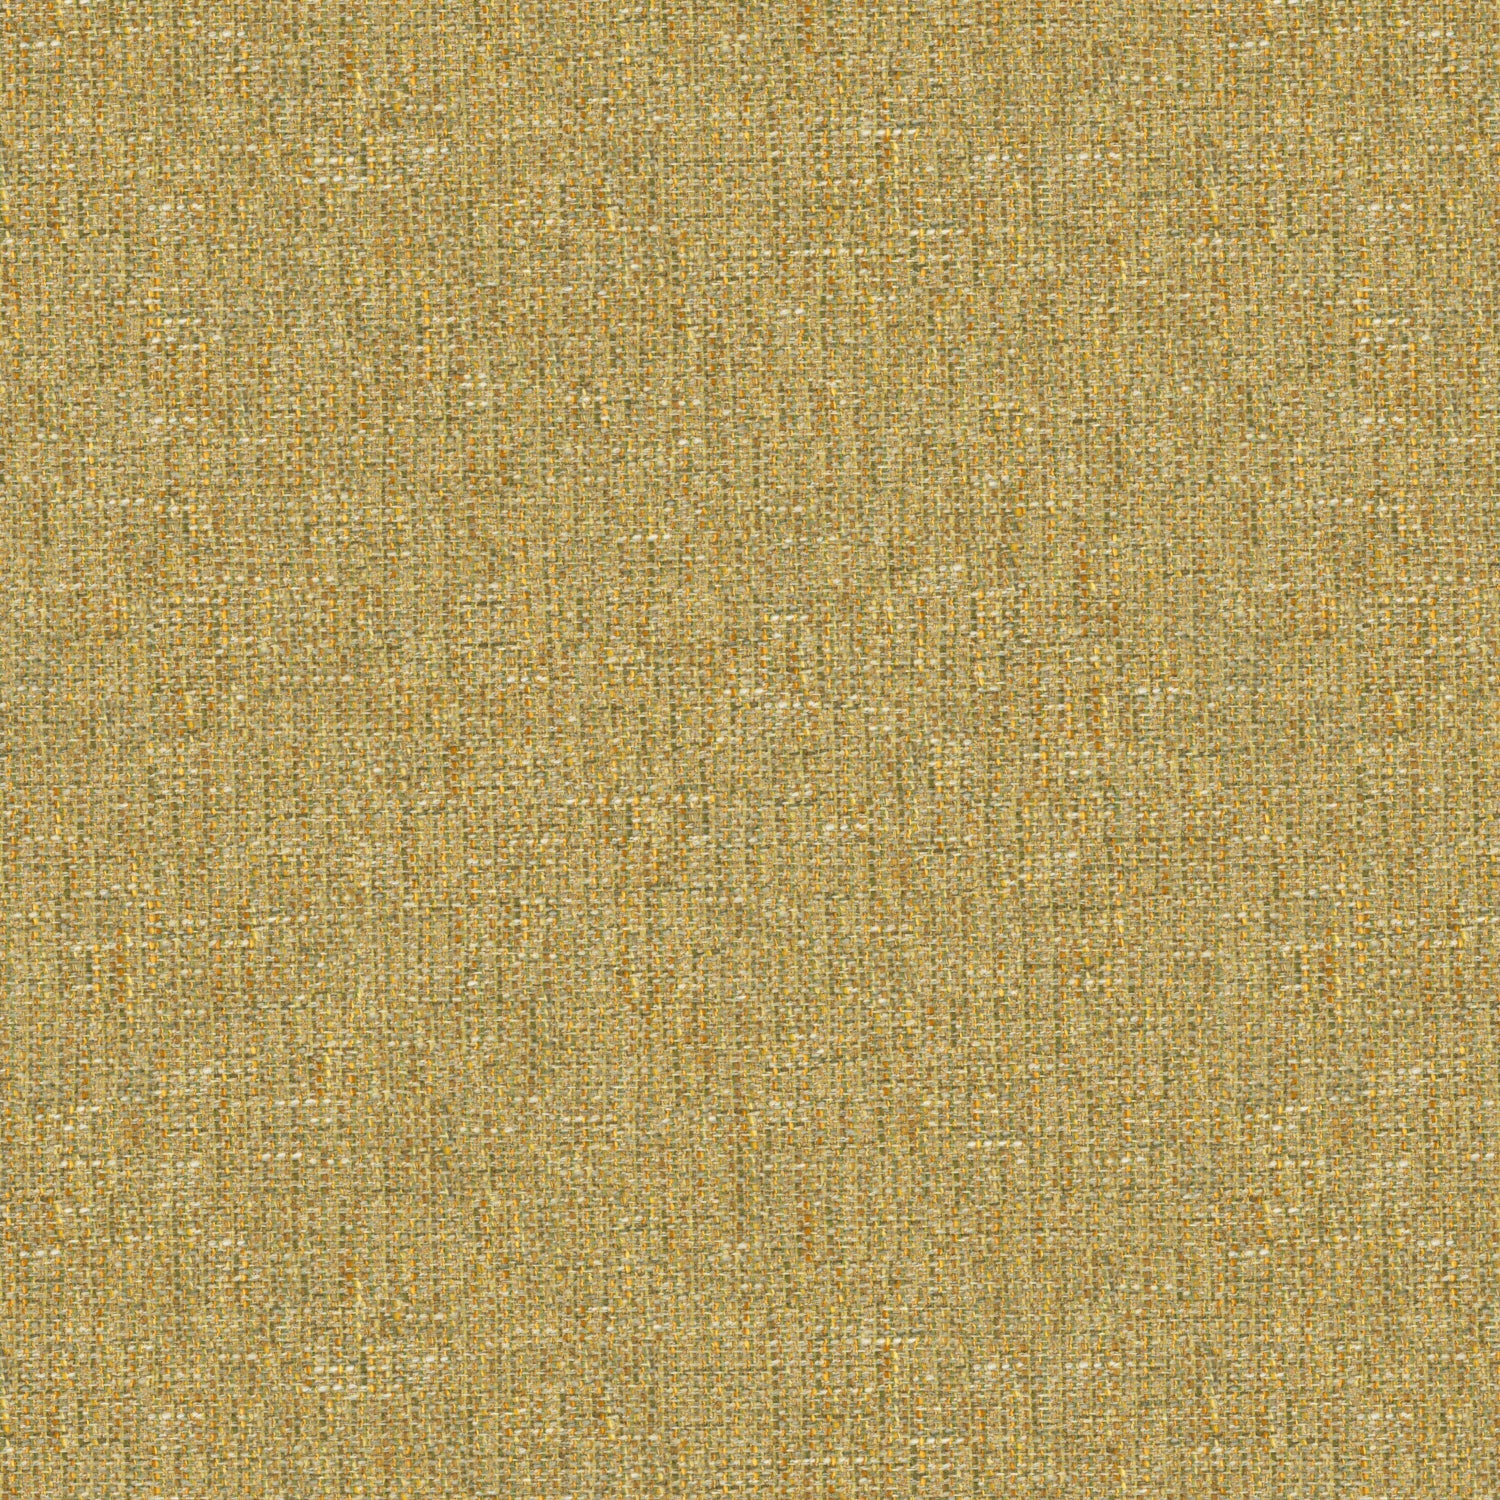 Tamar - Sandstone, Upholstery Fabric, Weave Fabric